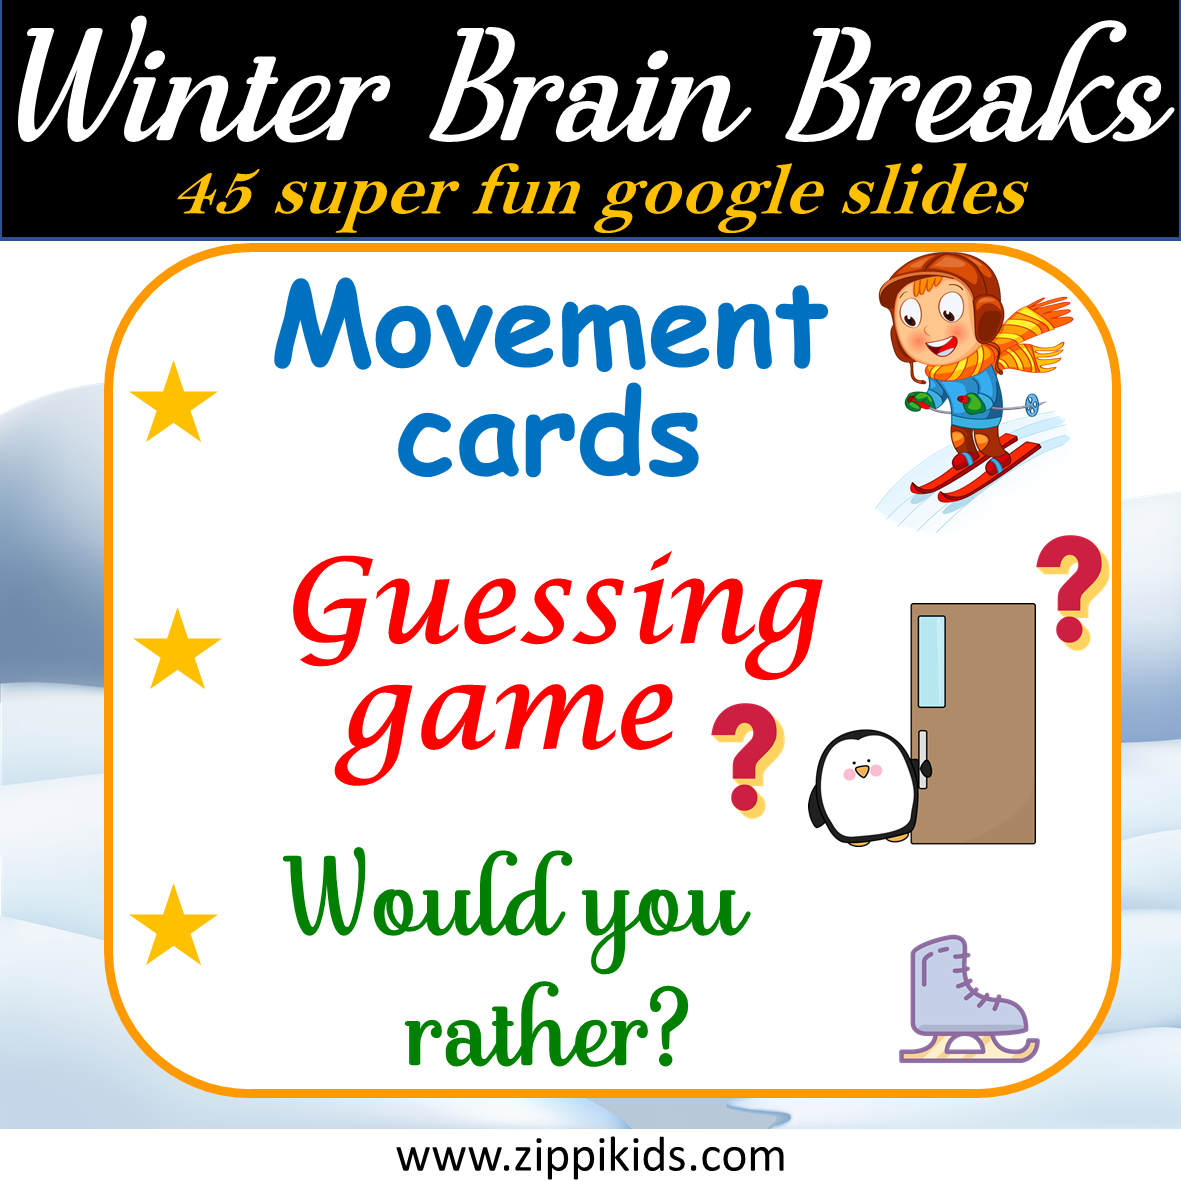 Winter Brain Breaks, Winter games, Fun Fridays - 45 Google Slides/PowerPoint